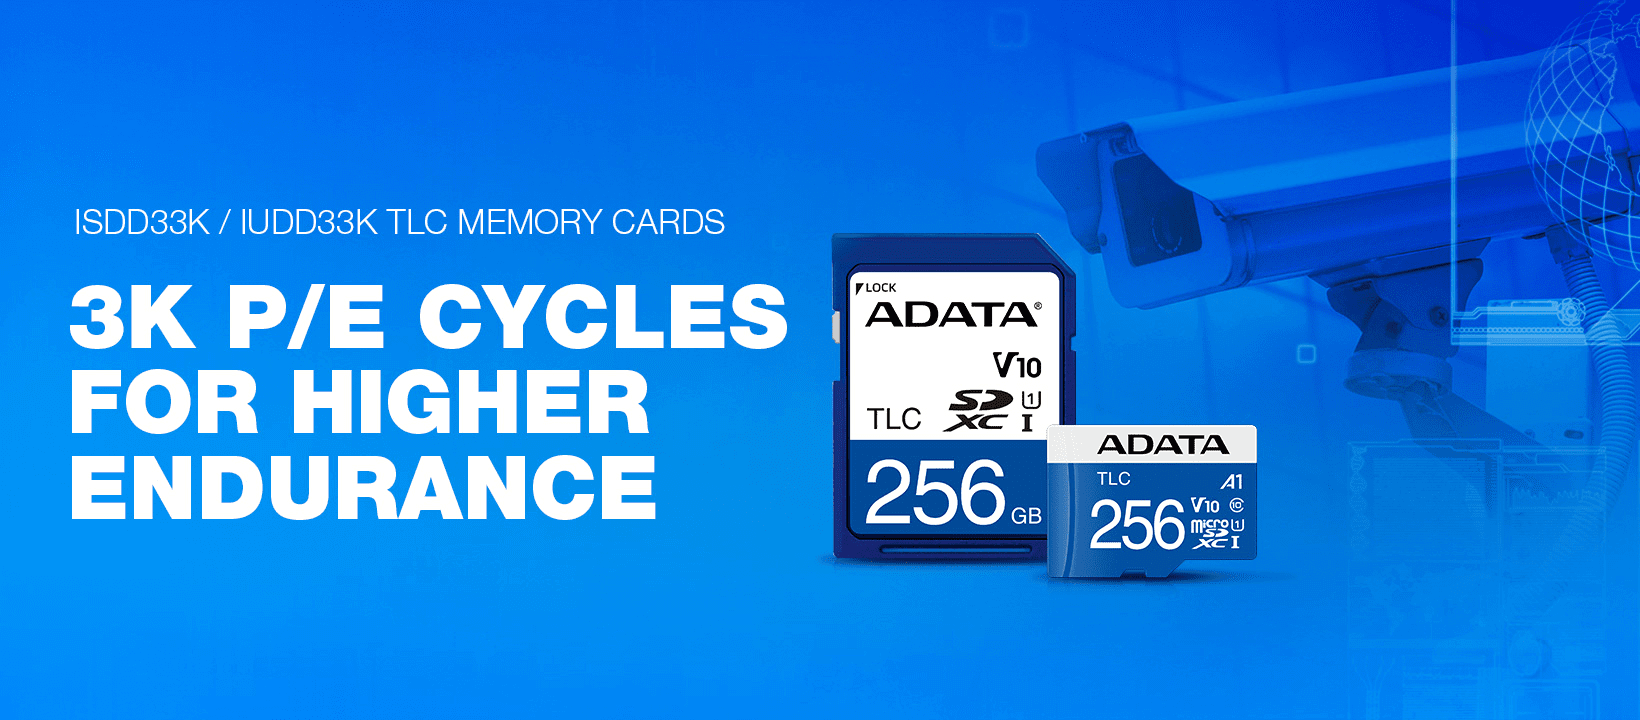 ADATA ISDD33K / IUDD33K TLC Memory Cards 3K P/E Cycles For Higher Endurance